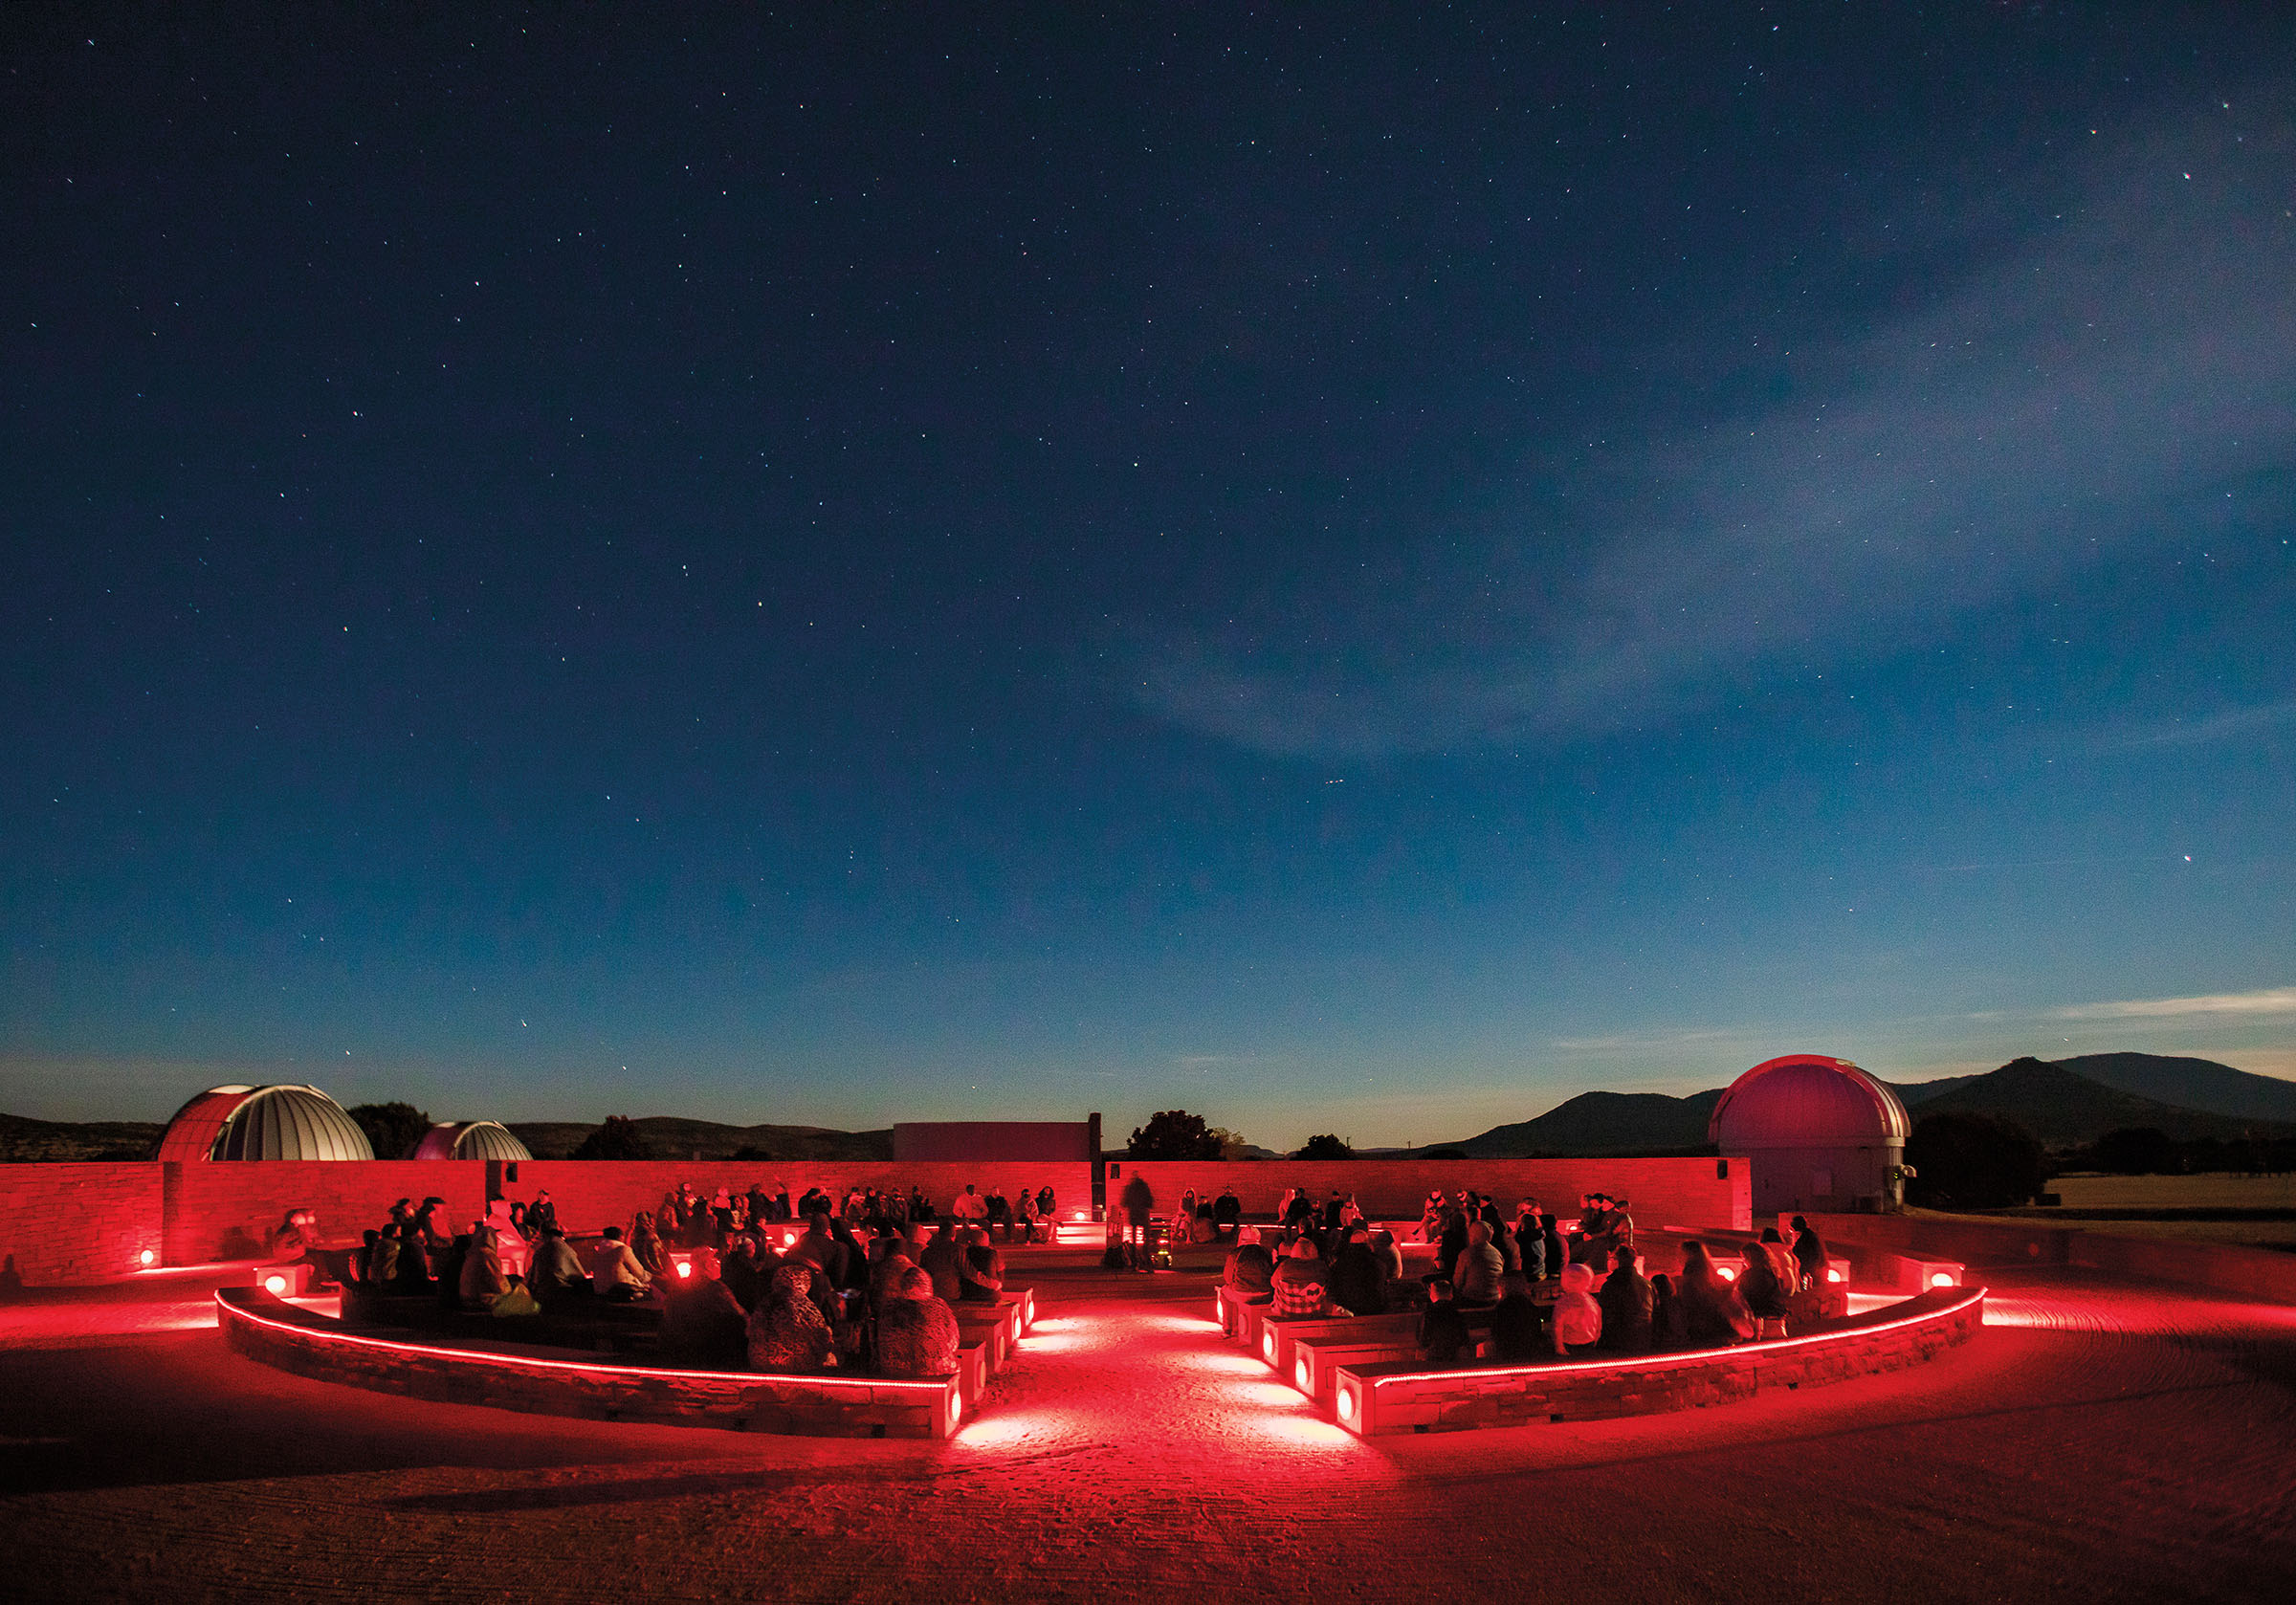 A low red glow illuminates an audience of spectators underneath a dark night sky full of stars